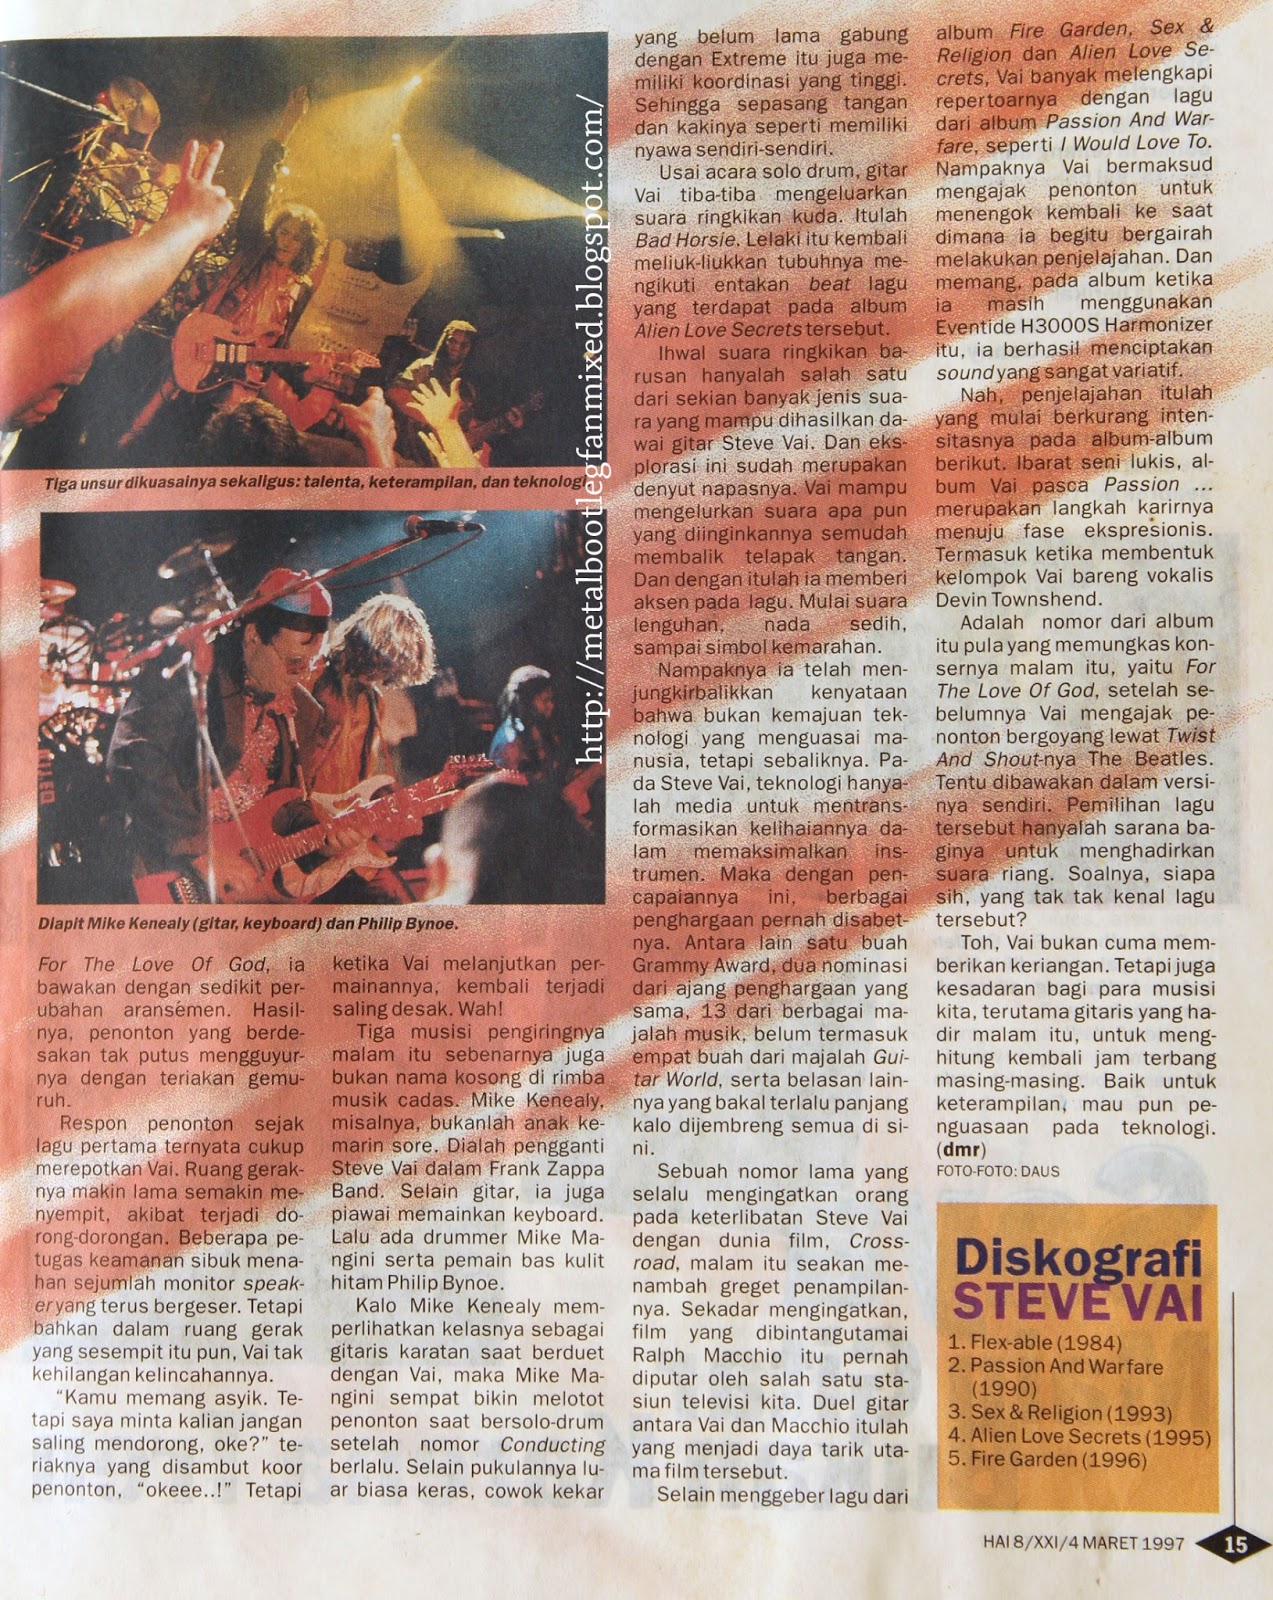 Metal Bootleg Fan Mixed Steve Vai 1997 Magazine Interview Bahasa Indonesia